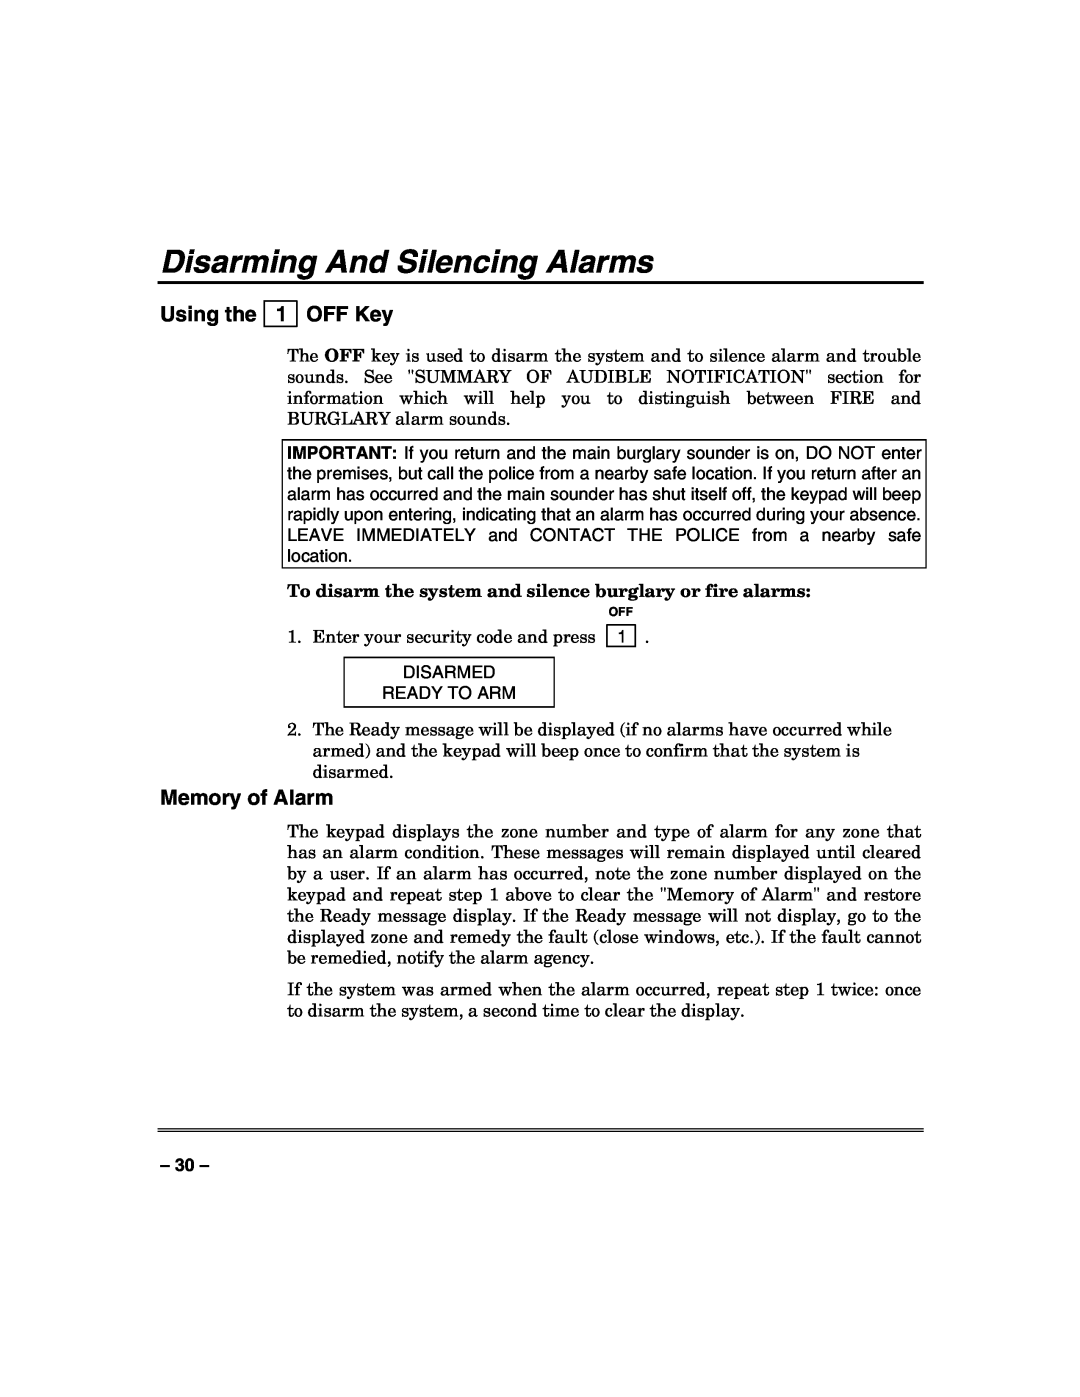 Honeywell N7003V3 manual Disarming And Silencing Alarms, Using the 1 OFF Key, Memory of Alarm 